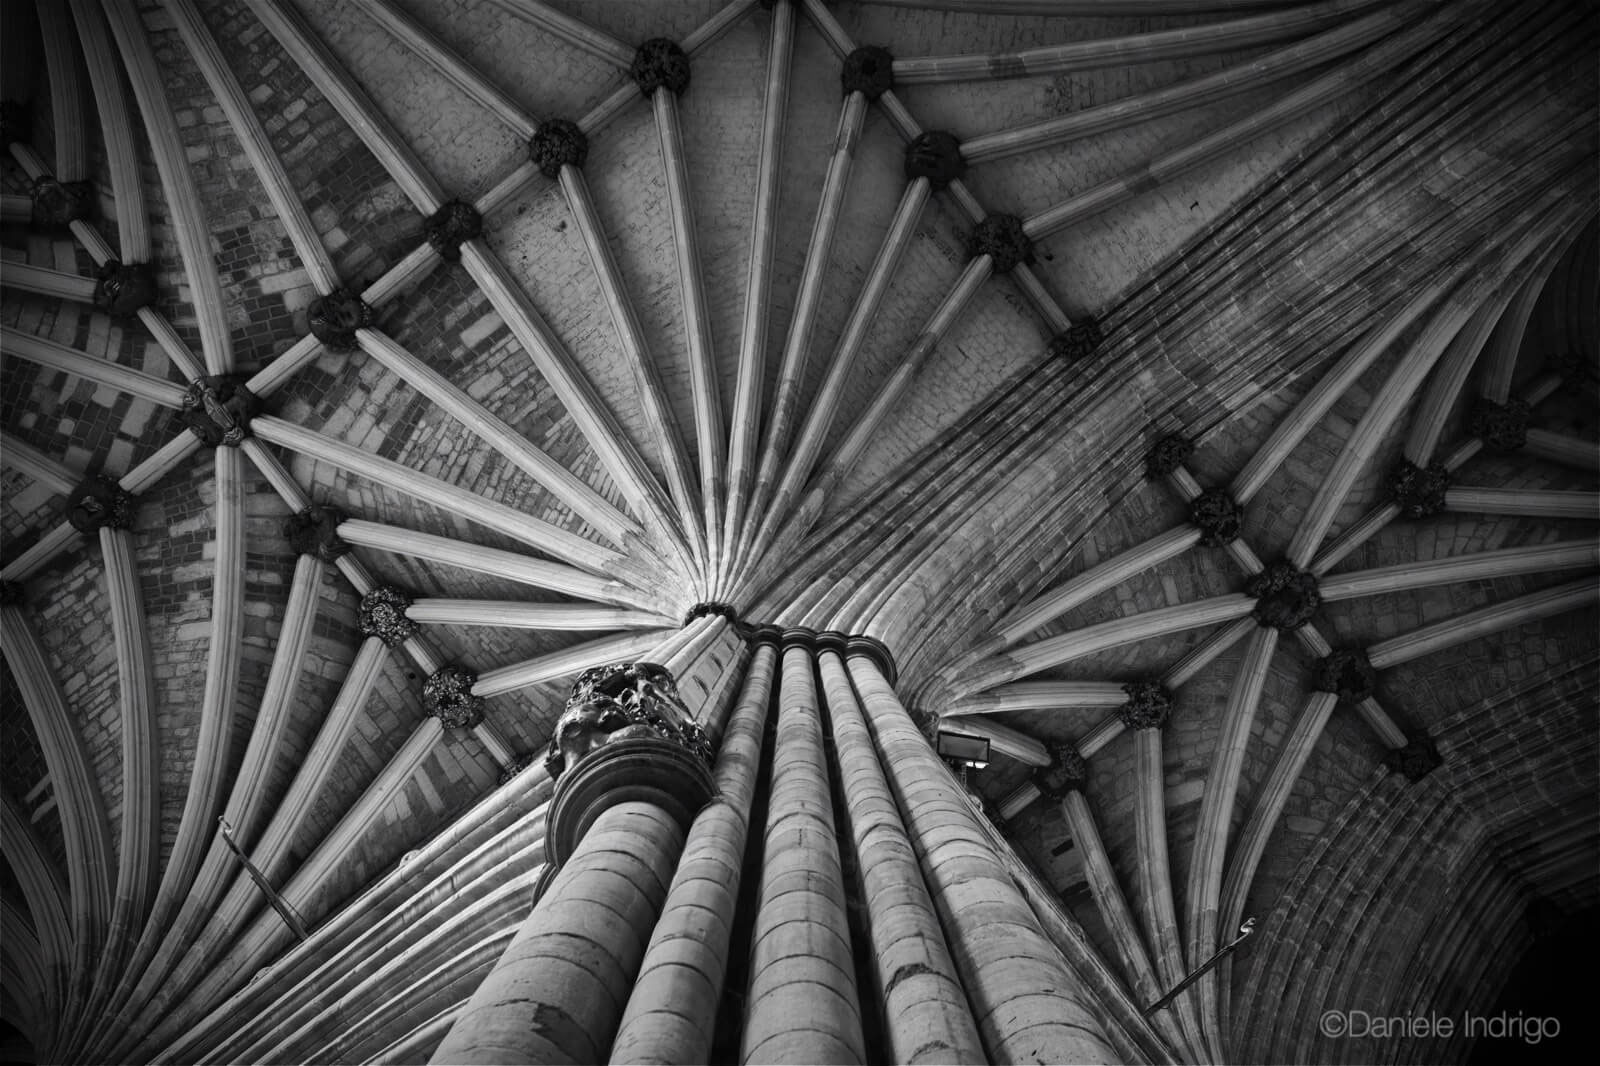  cattedrali gotiche - cattedrale di Exeter, UK (photo: Daniele Indrigo)